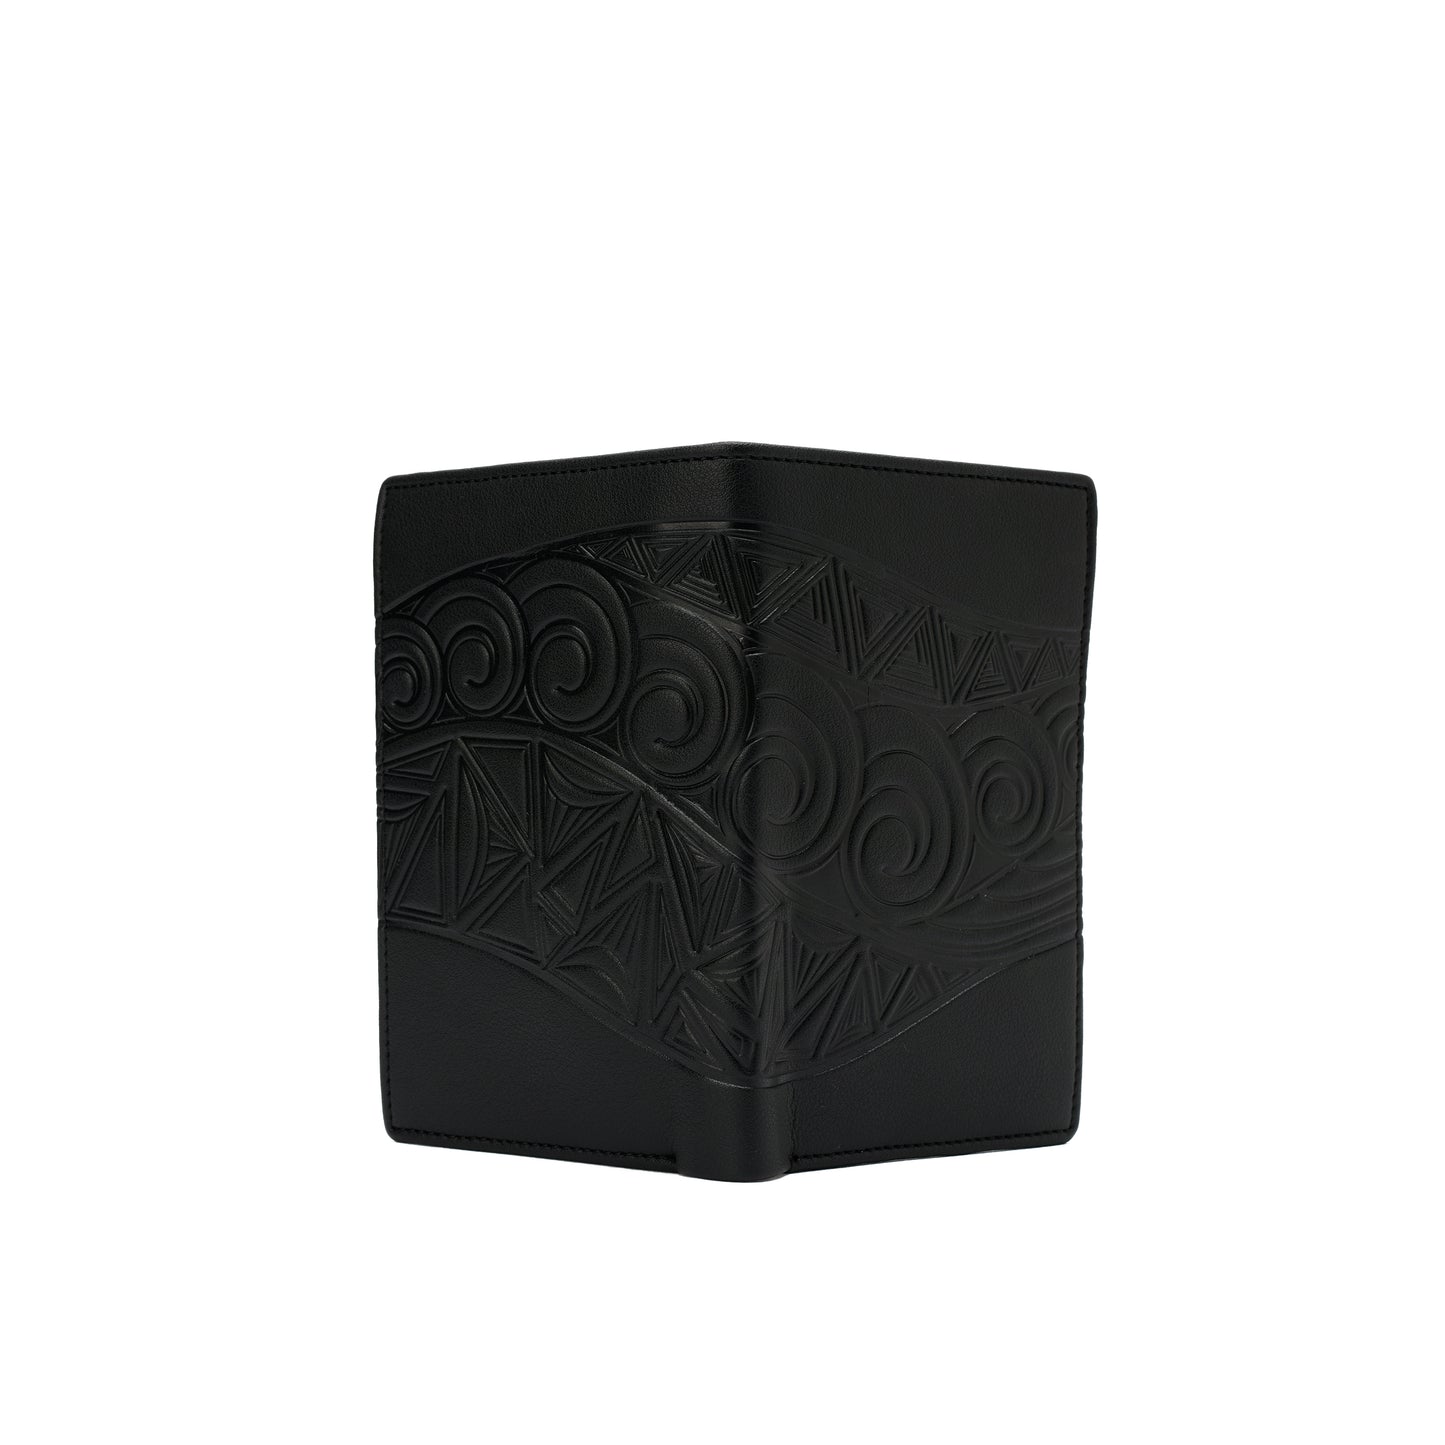 Black engraved Arabisk Wallet - Code 529